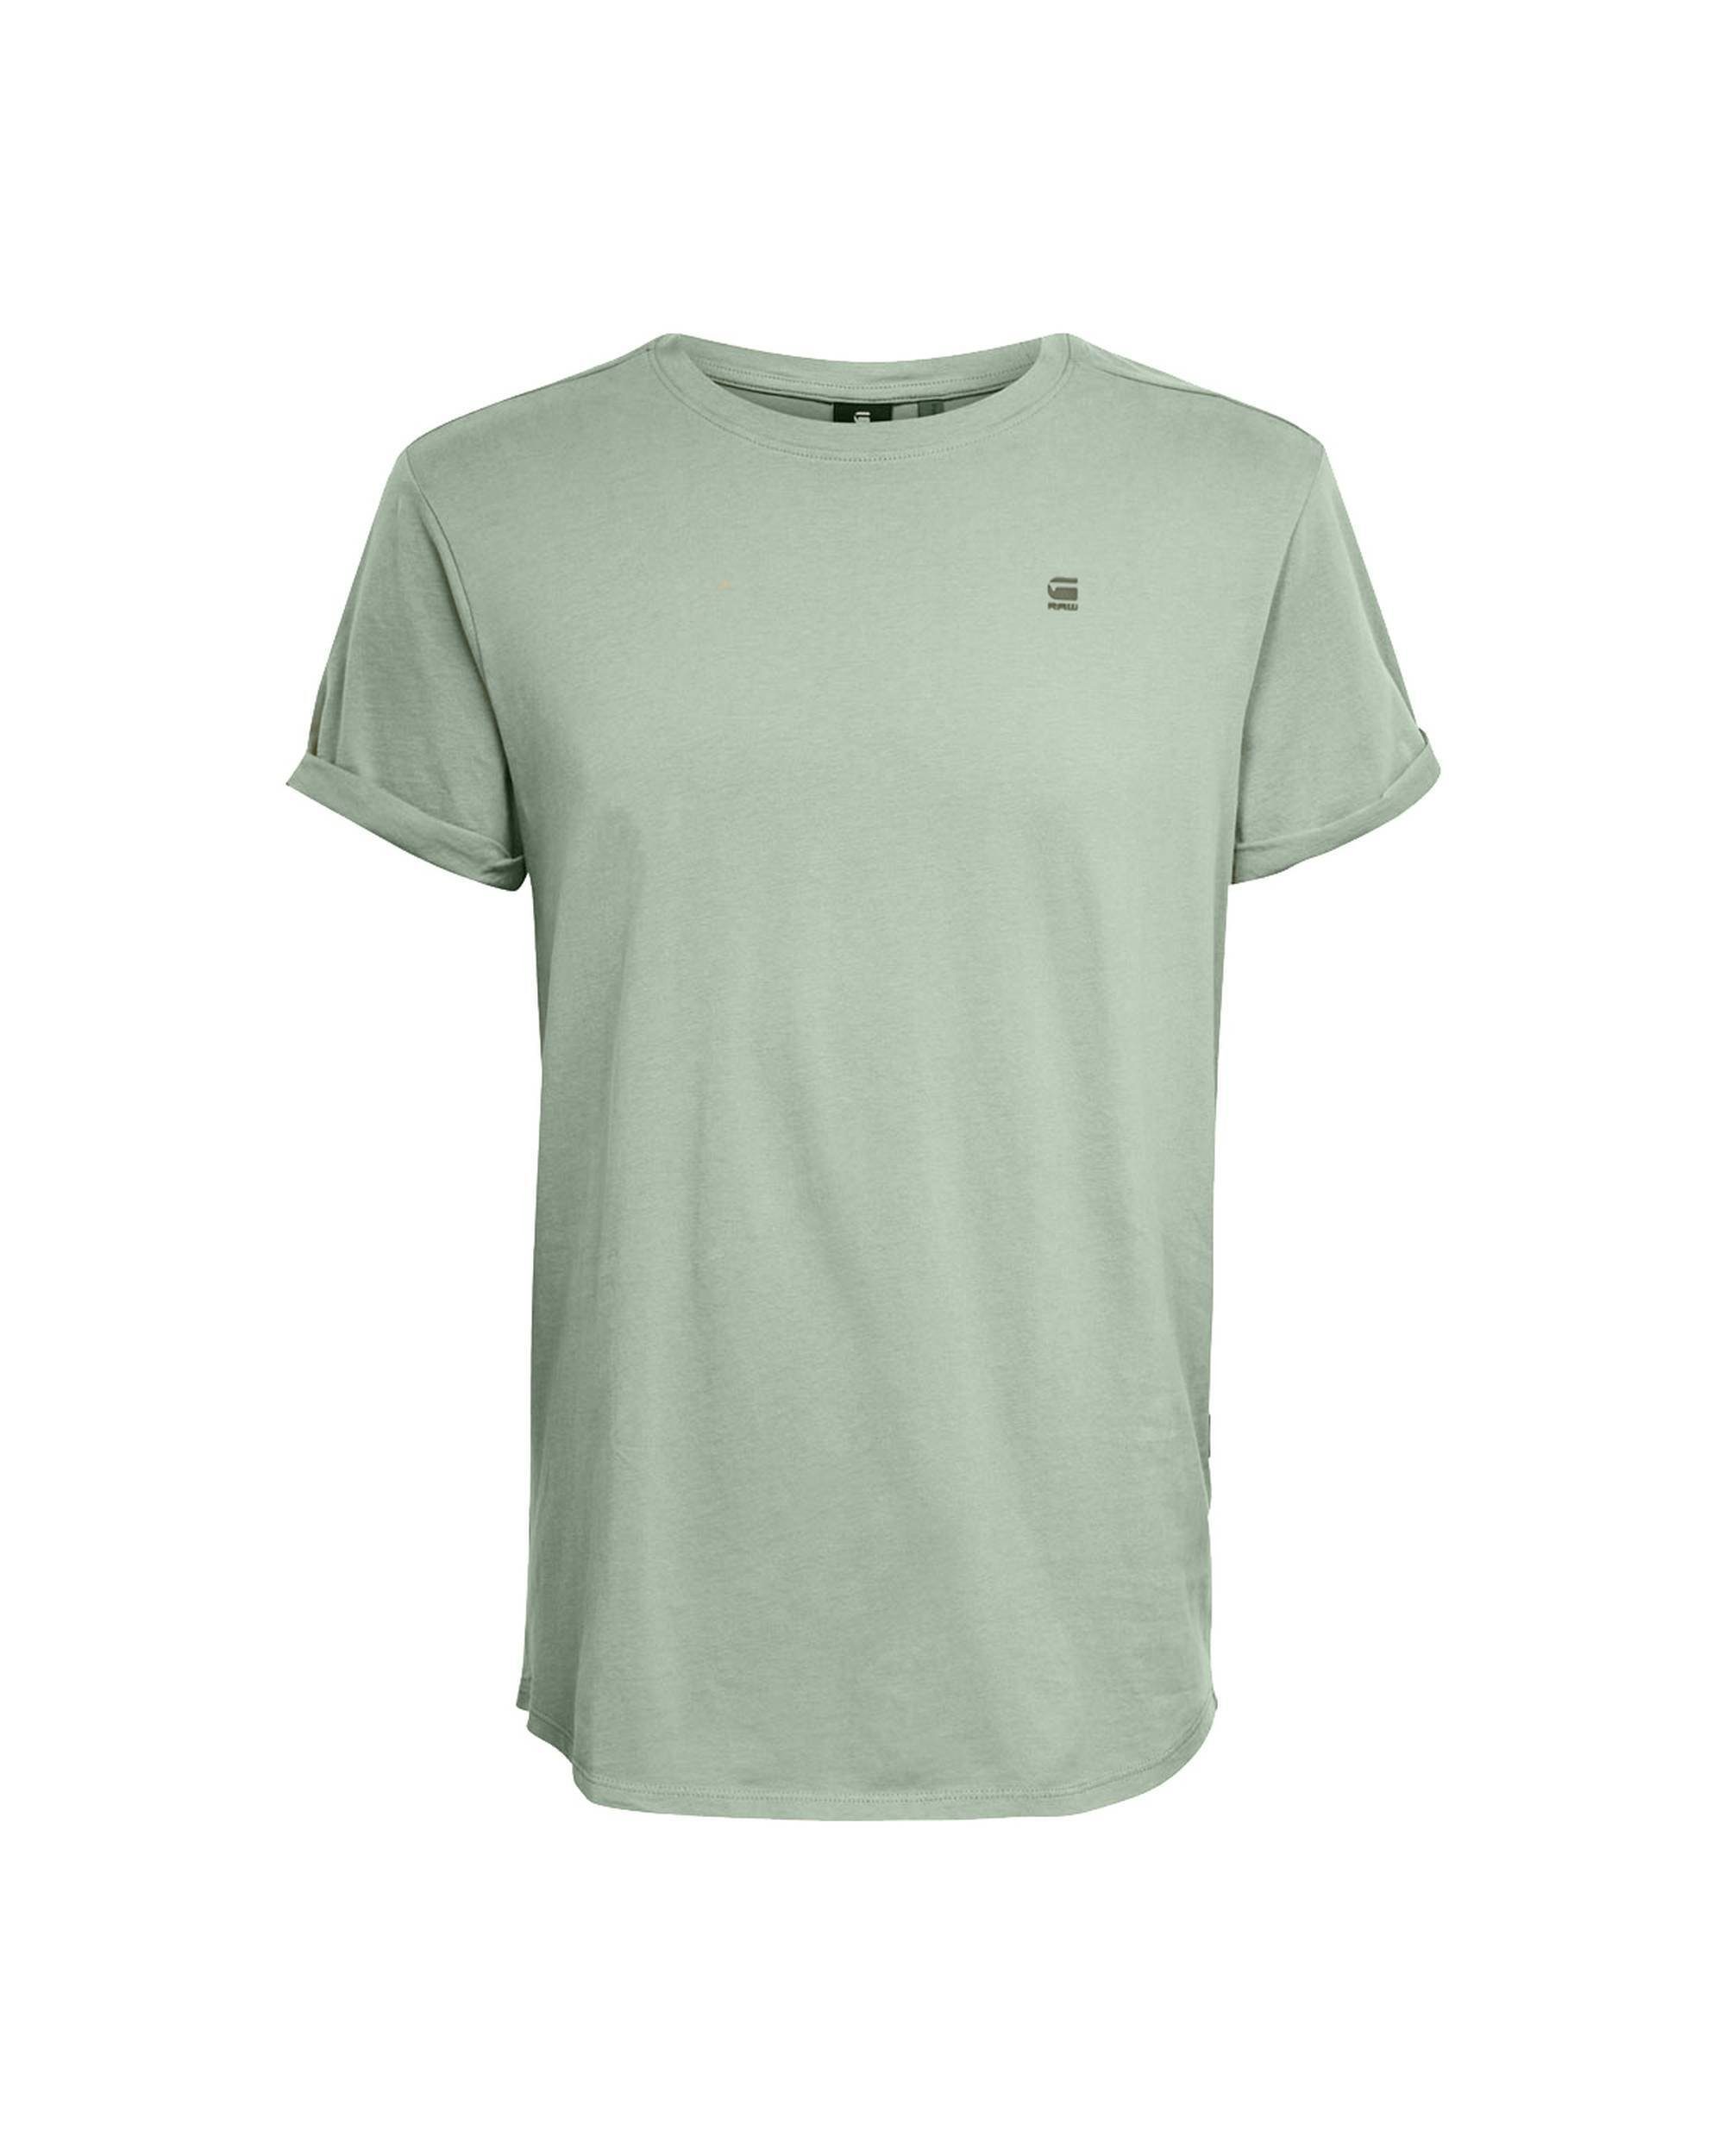 Mintgrün Rundhals, Lash, T-Shirt - Organic G-Star RAW Herren T-Shirt Cotton